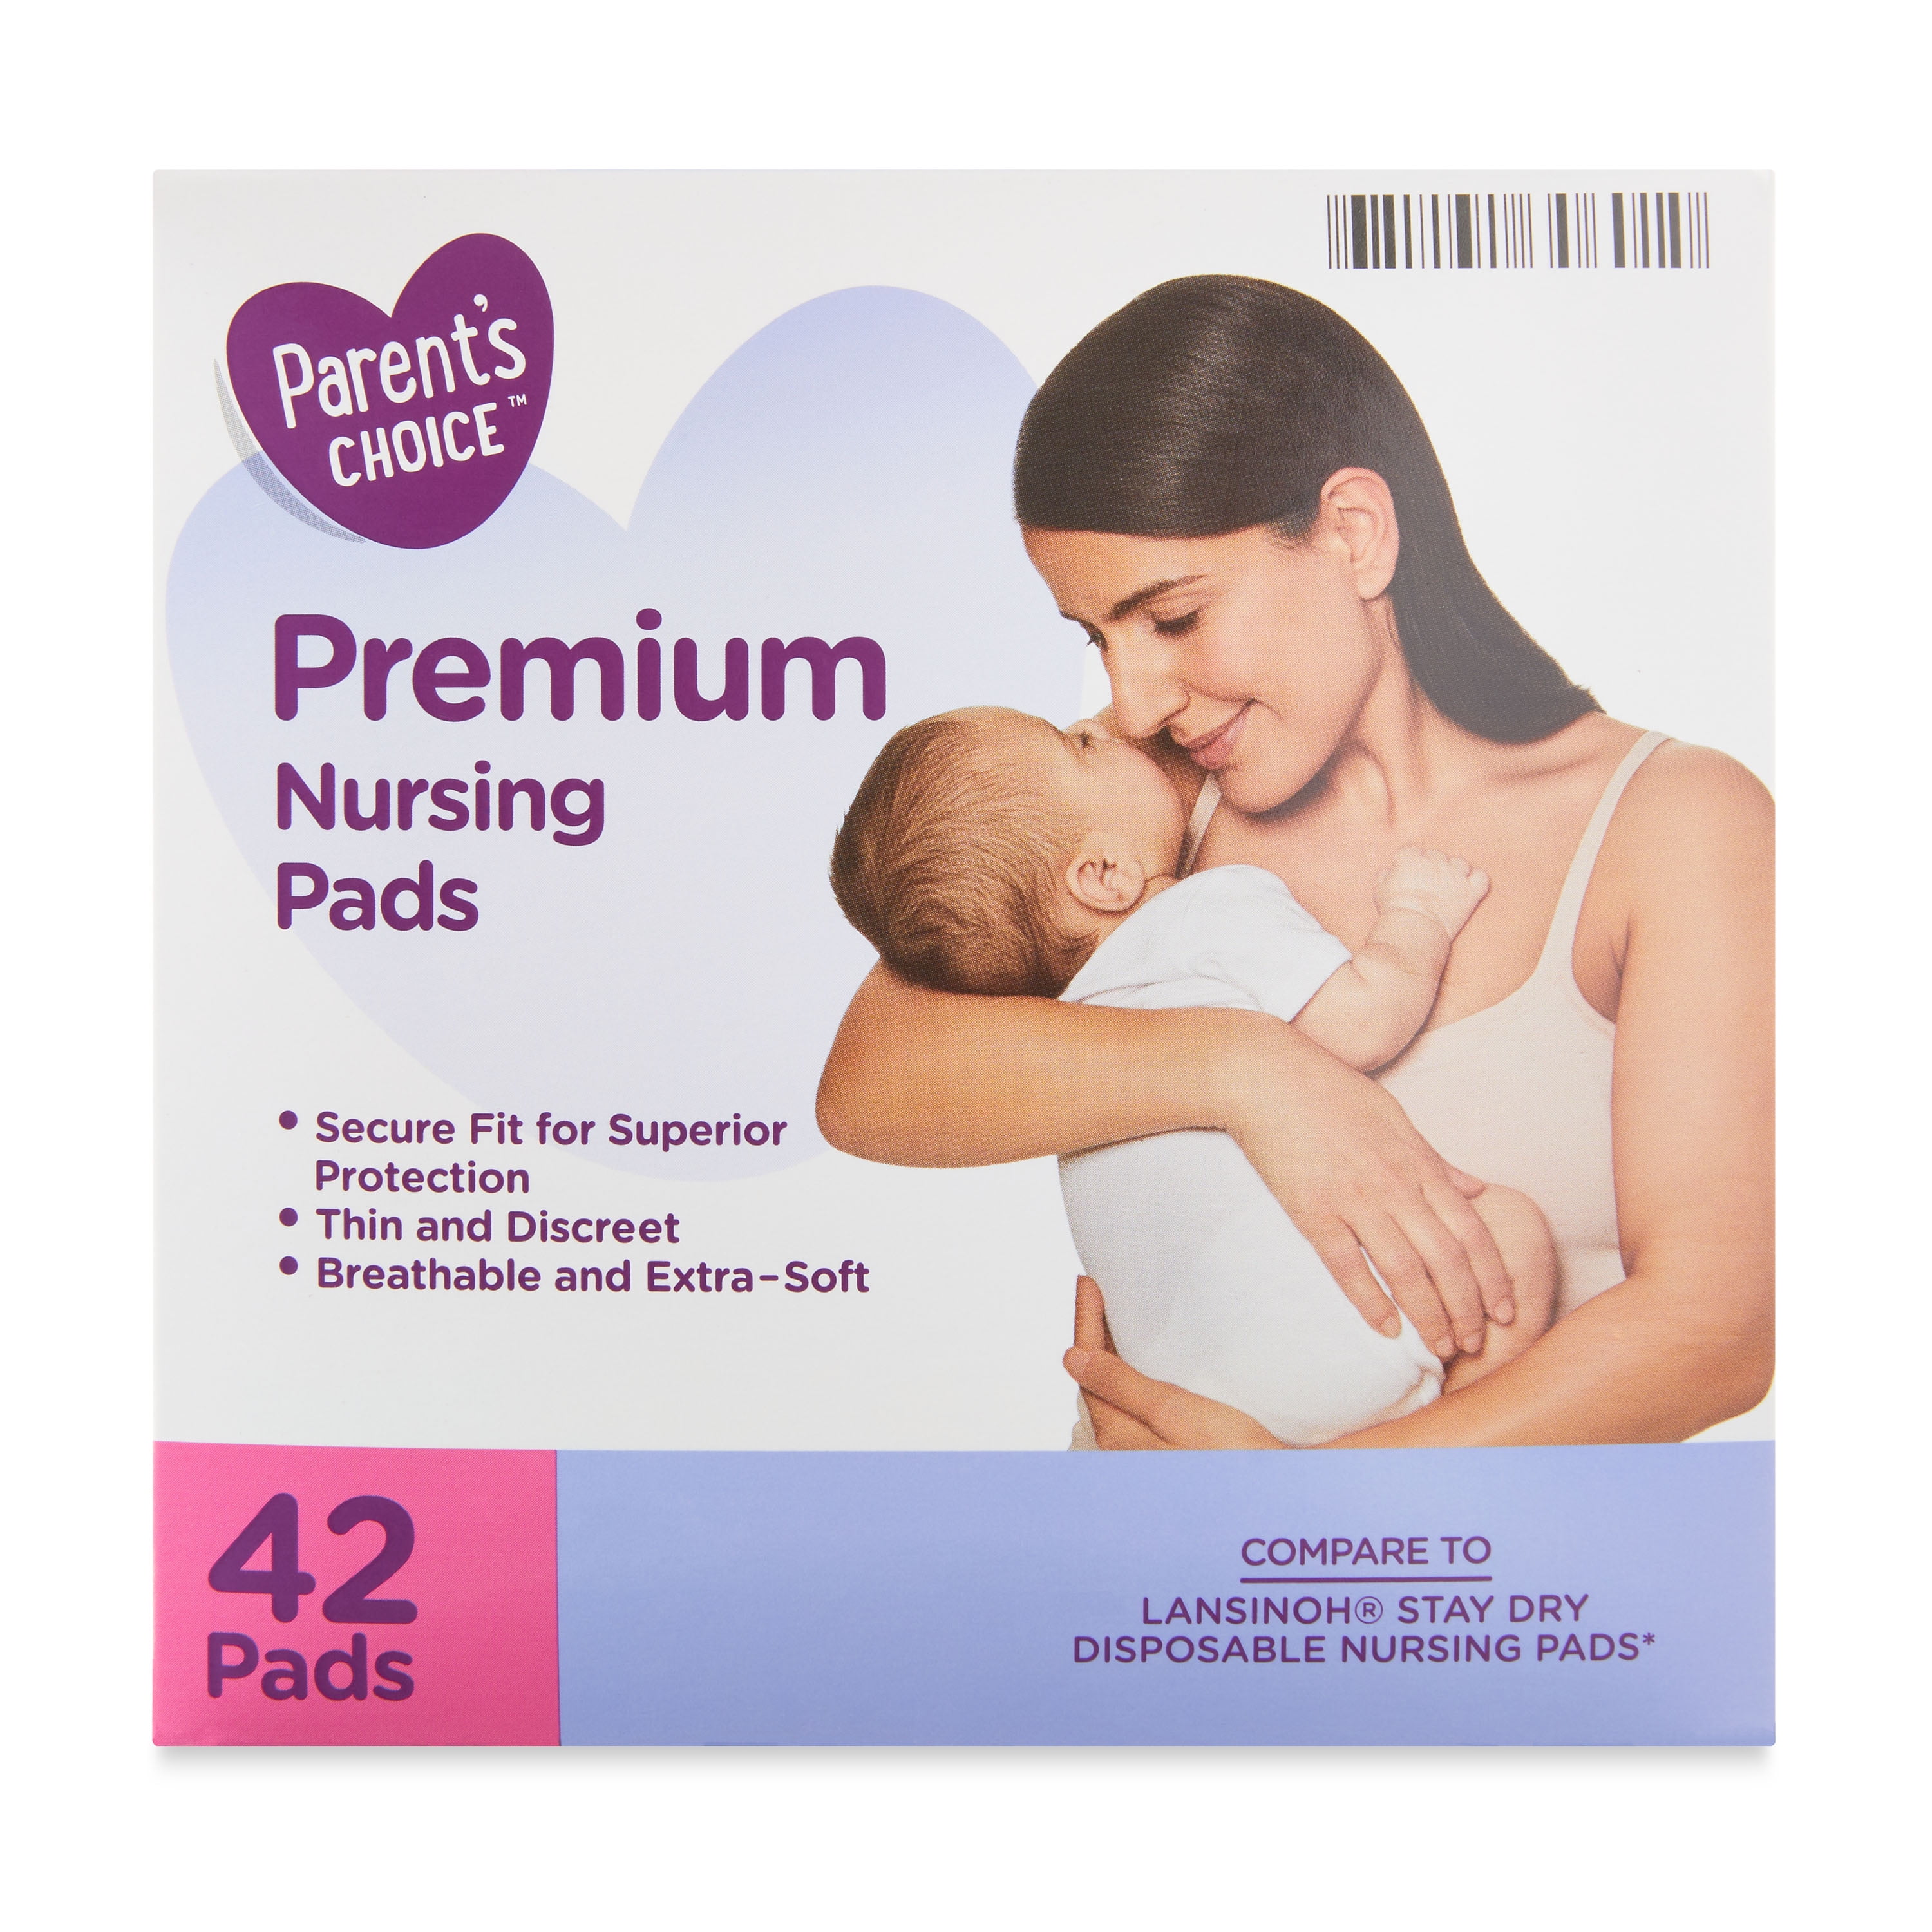 Parent's Choice Premium Nursing Pads, 42 Count